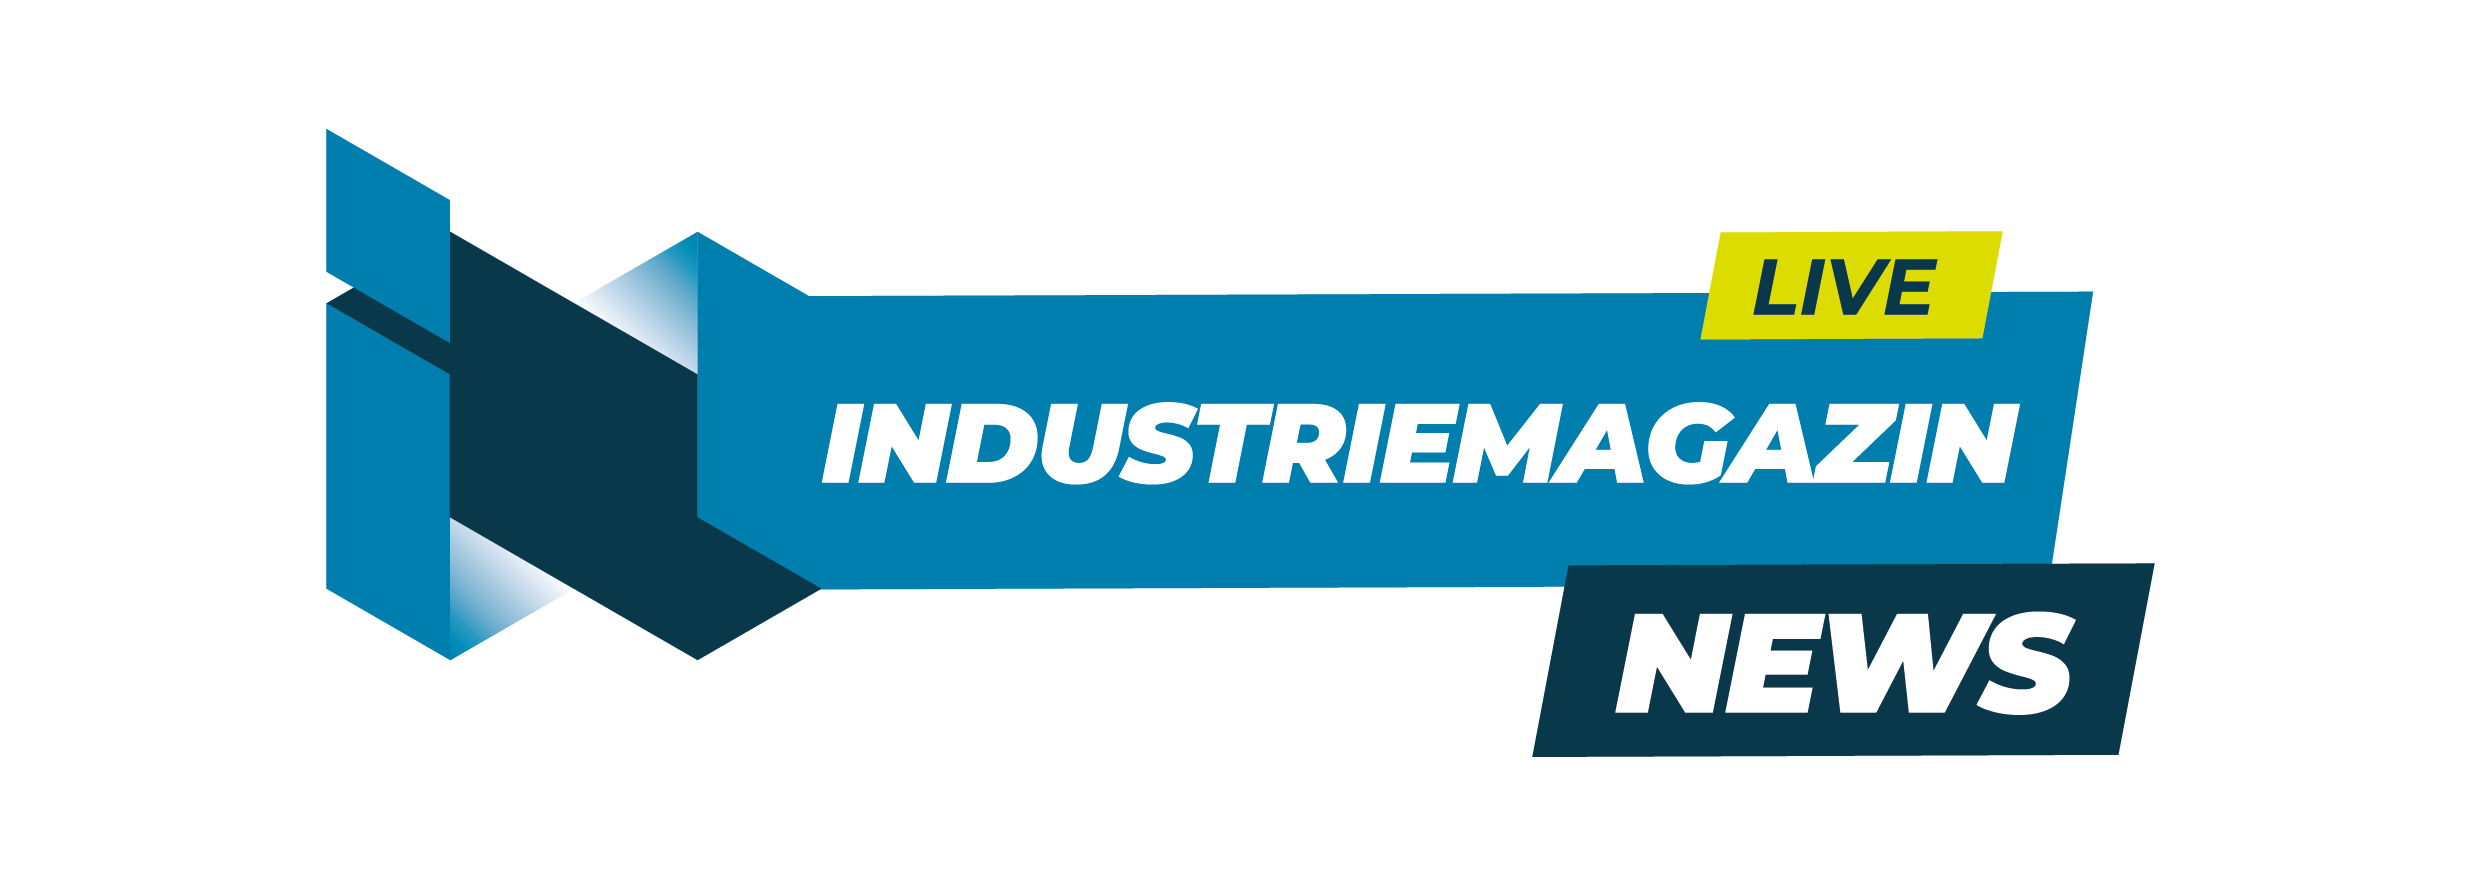 Industry Magazine News Logo